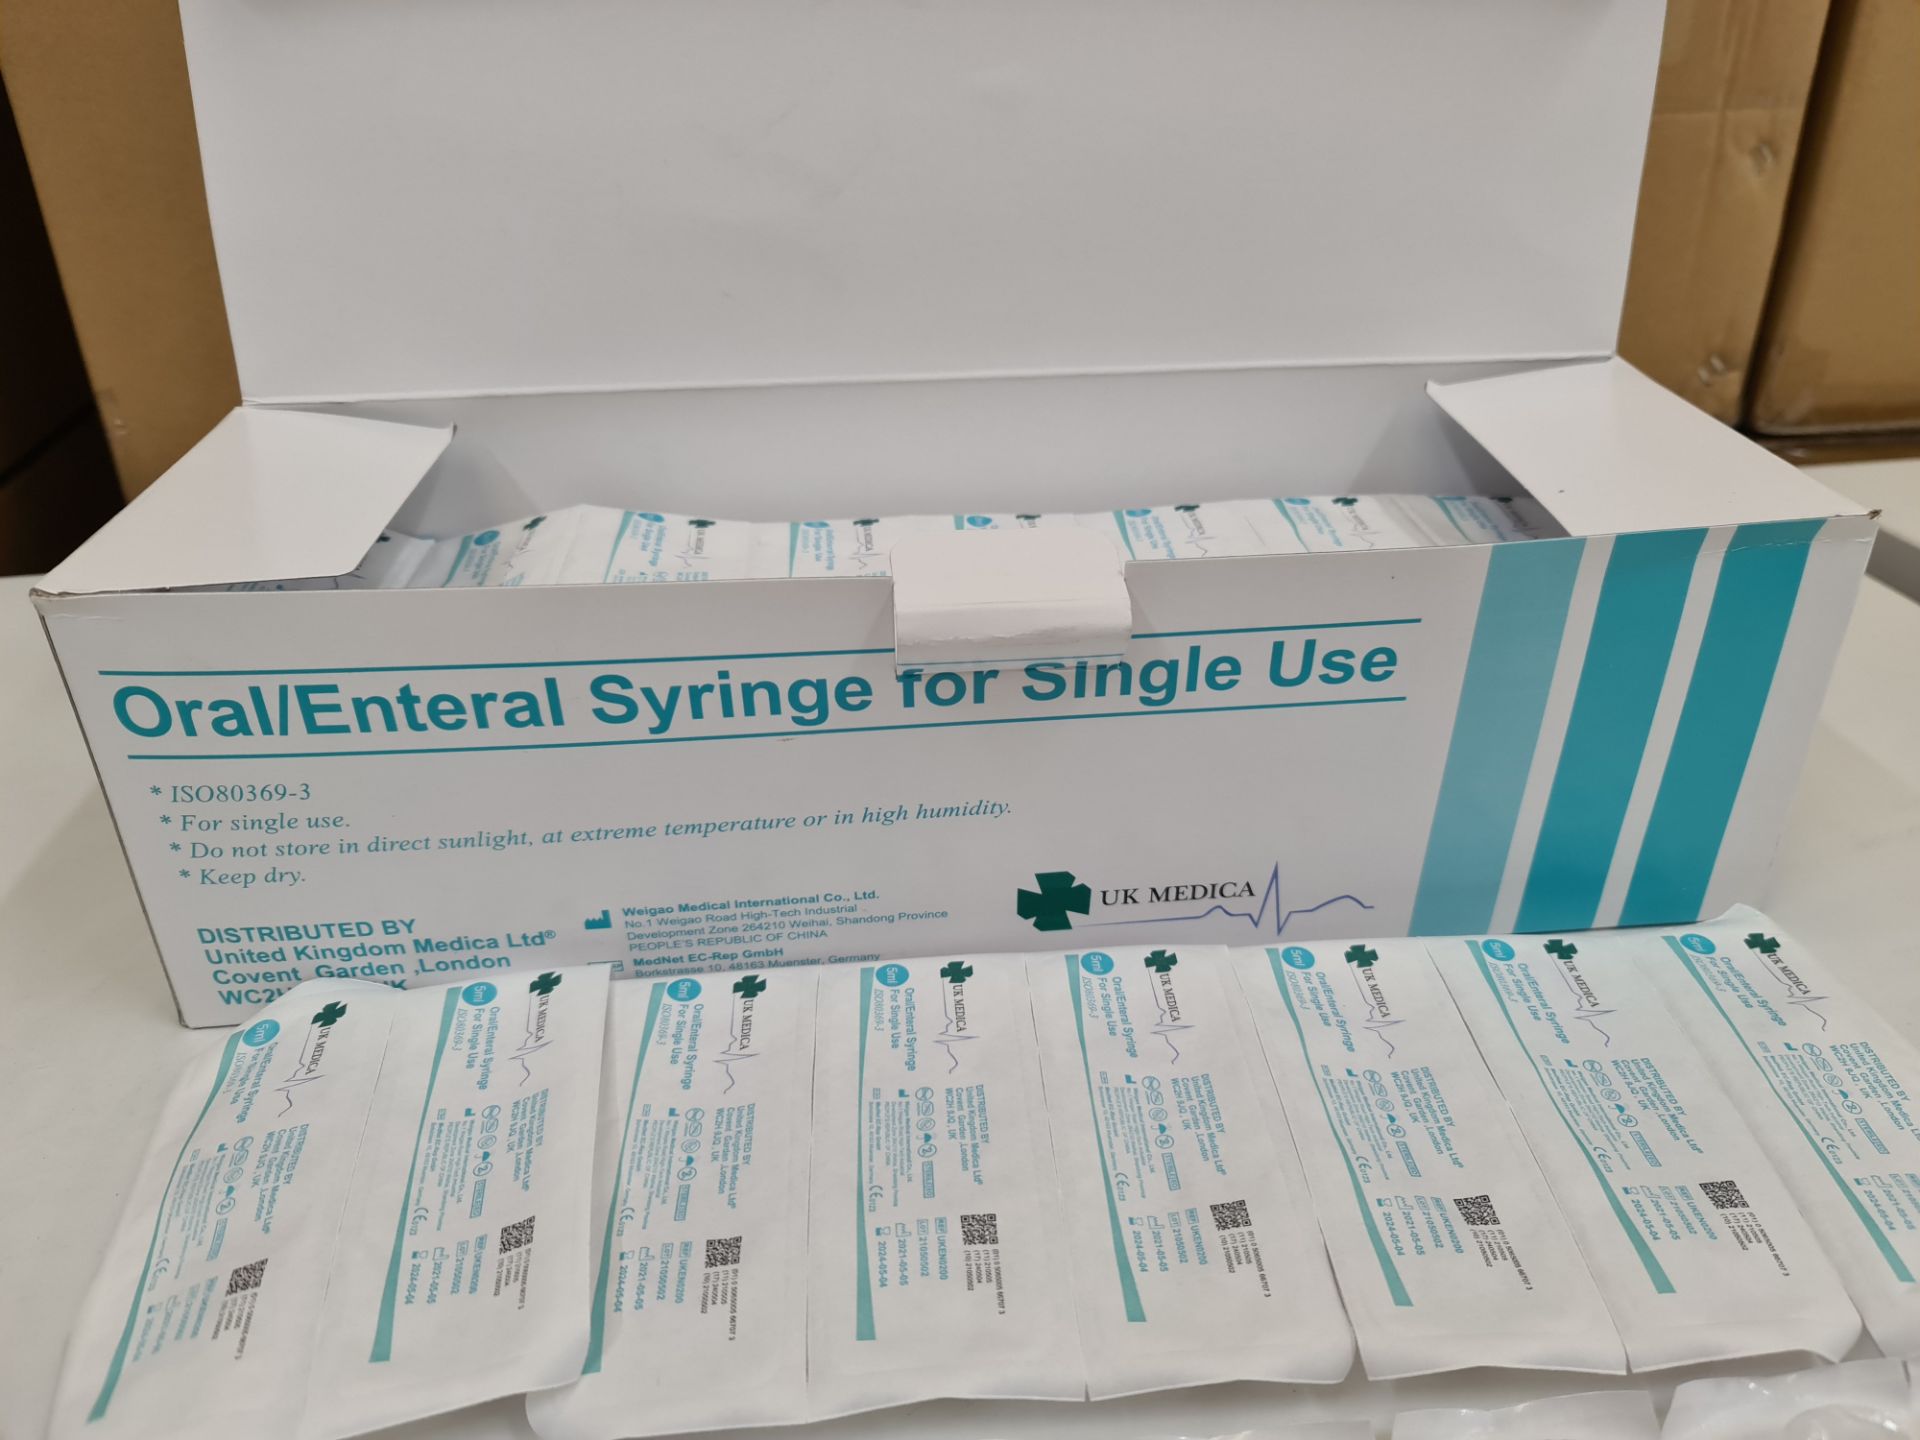 Approximately 200,000 oral/enteral feeding syringes - Image 3 of 18